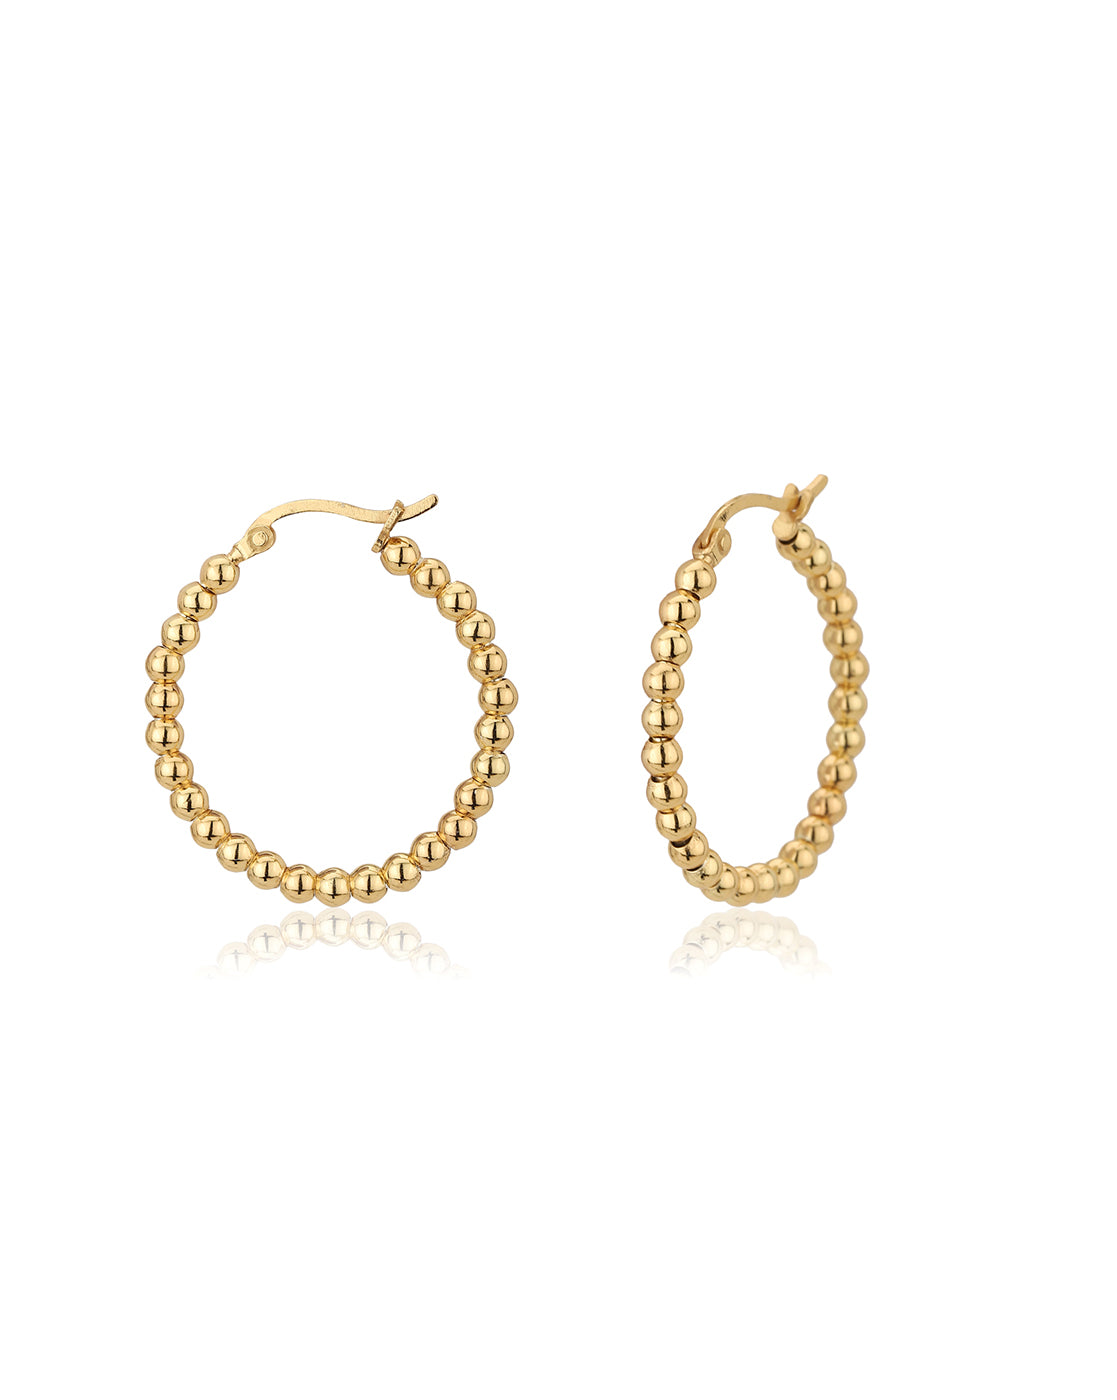 Carlton London Gold Plated Circular Hoop Earring For Women